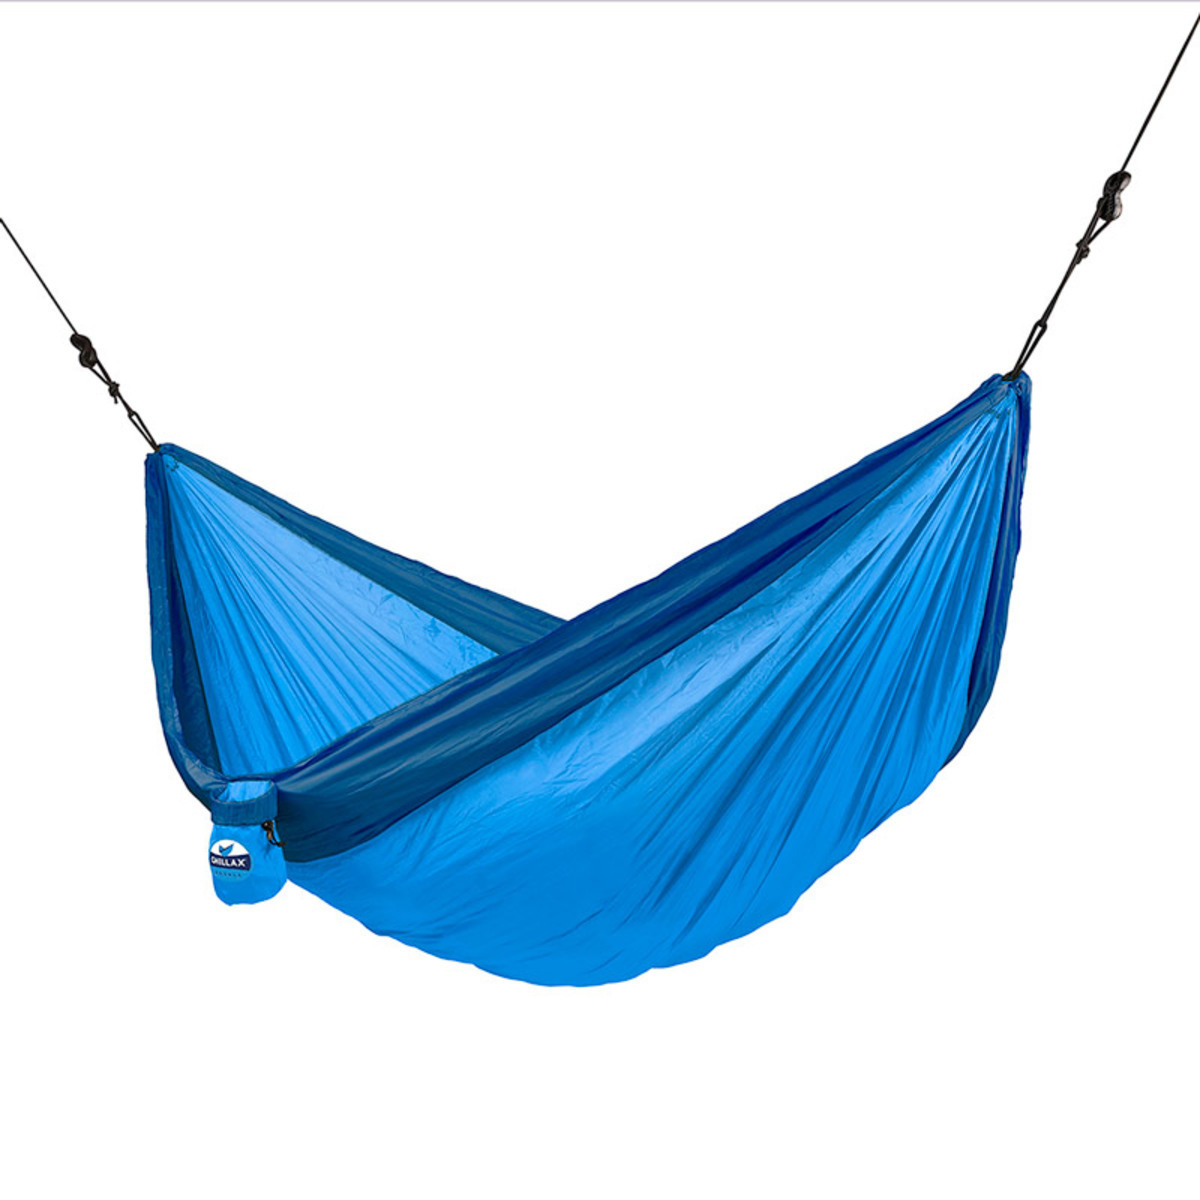 Chillax Parachute Travel Hammock - Blue